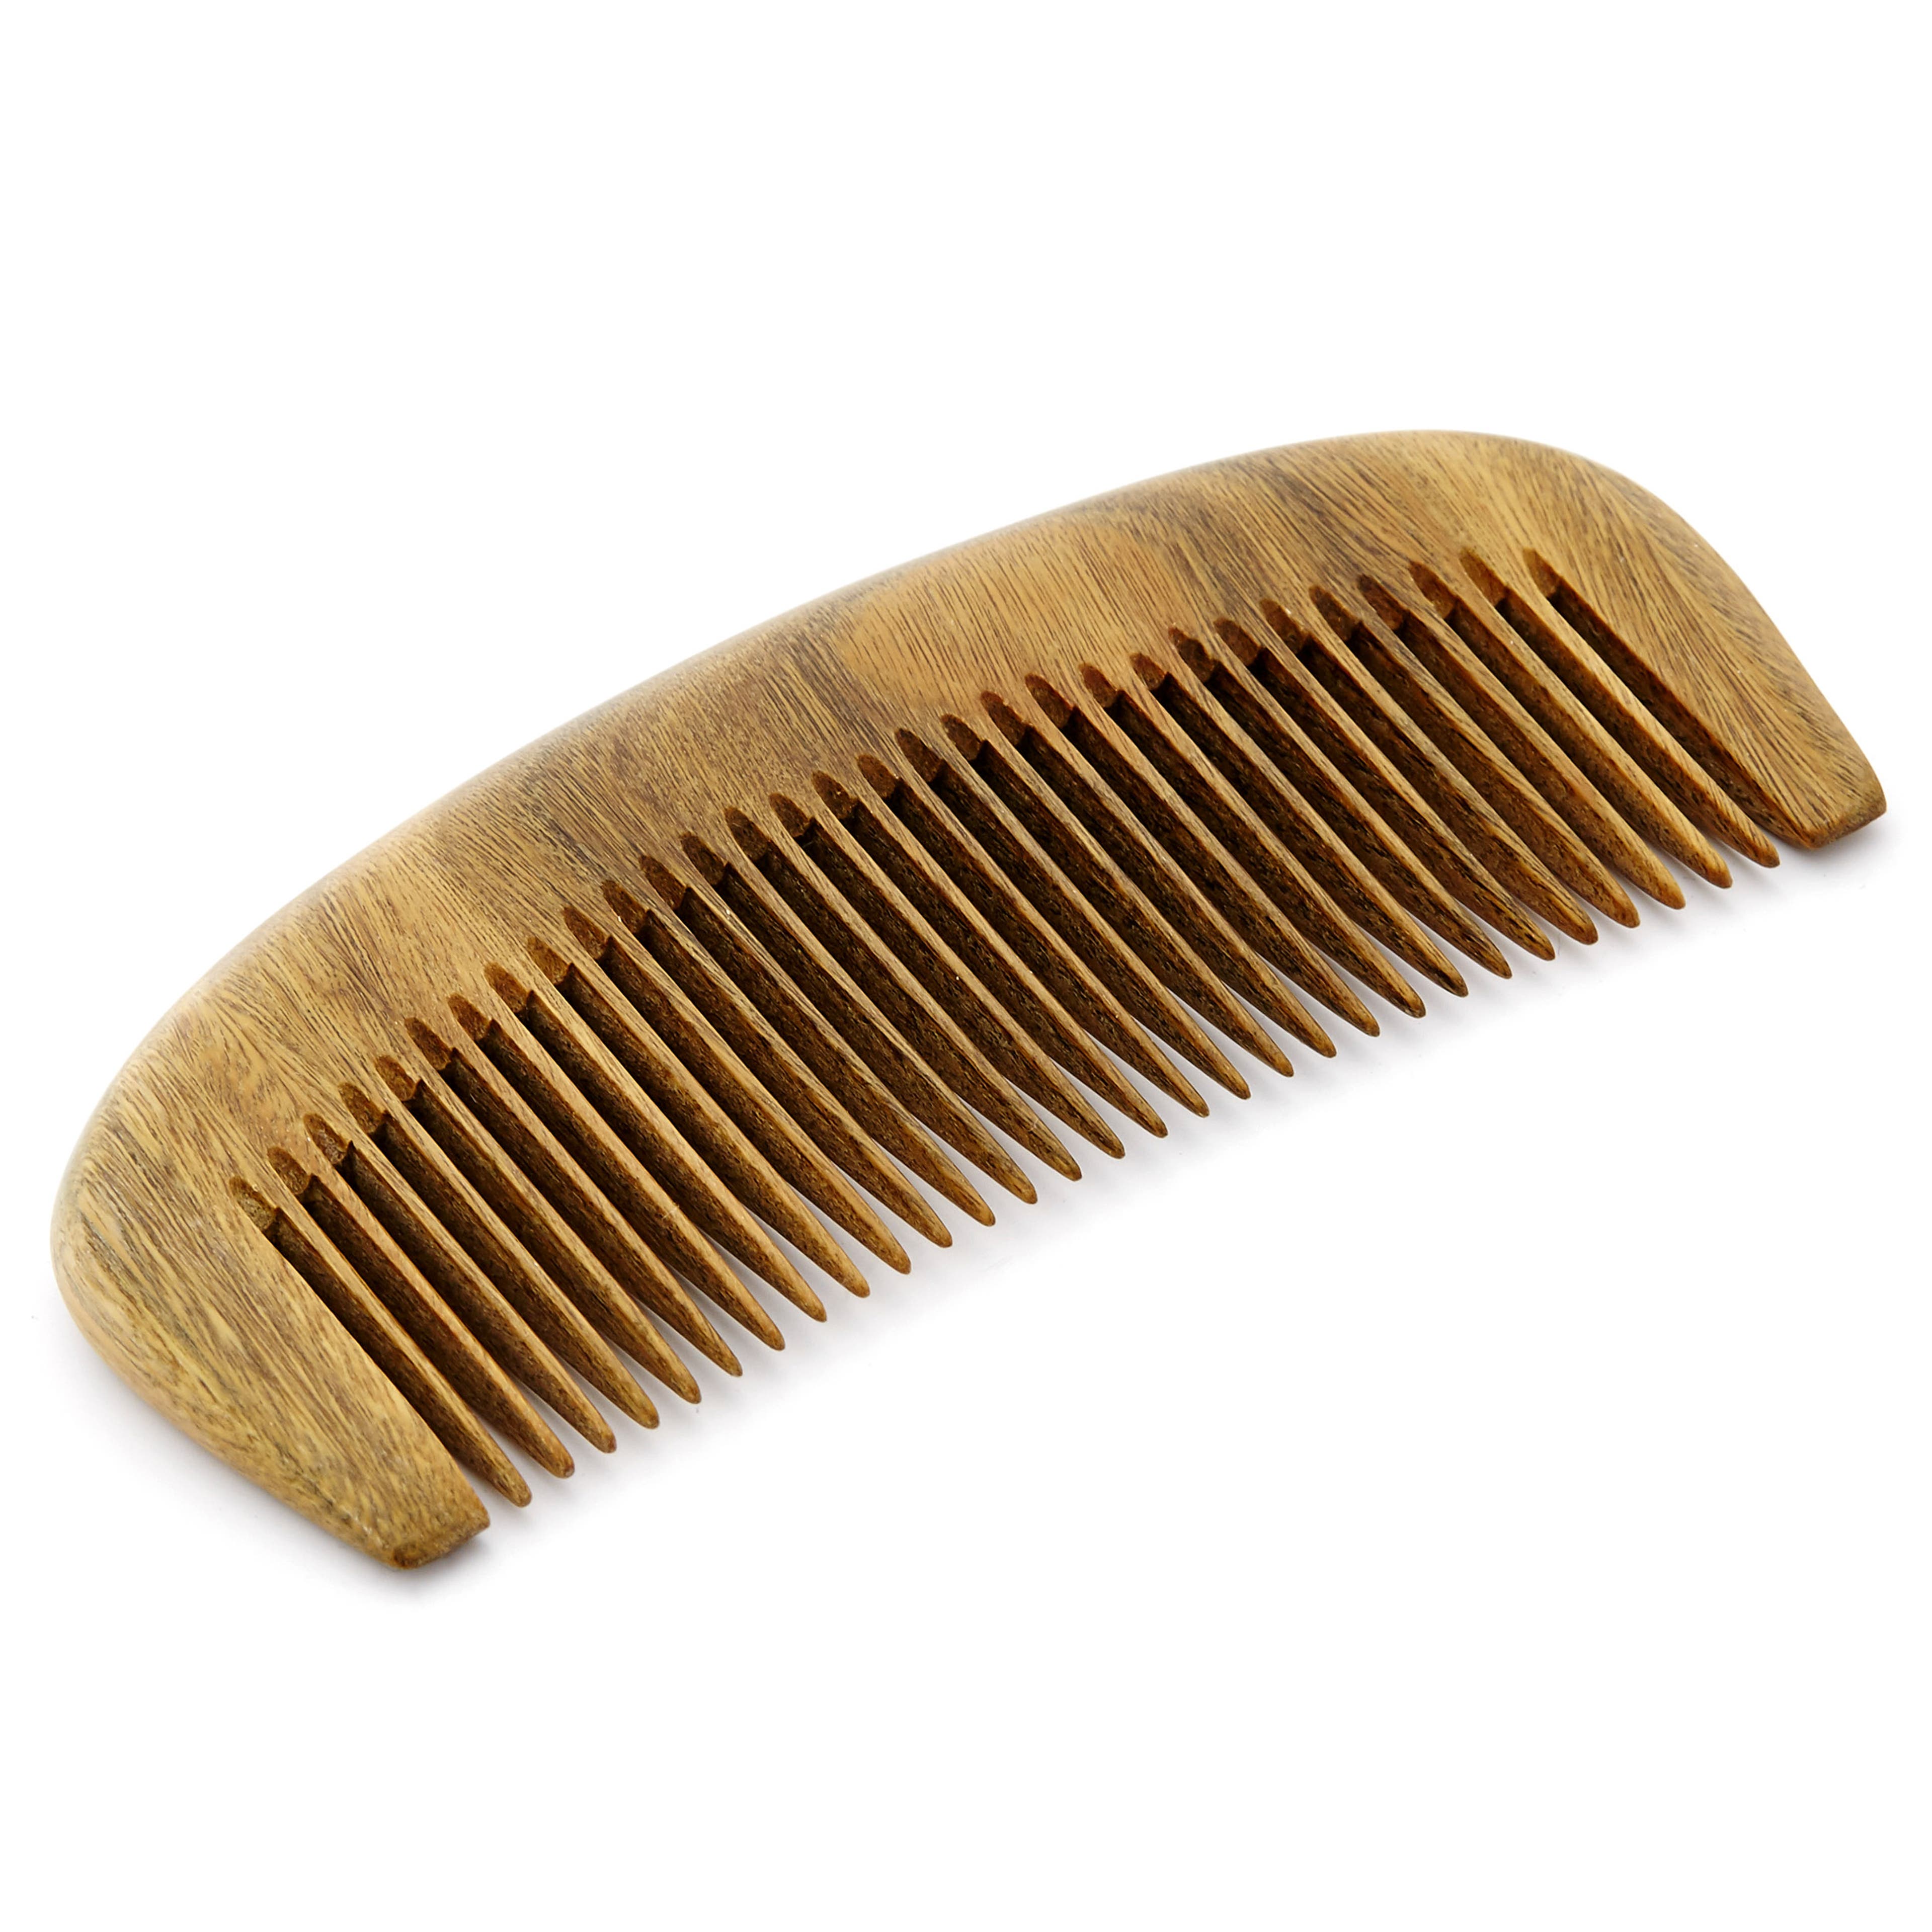 Wedge Sumac Comb